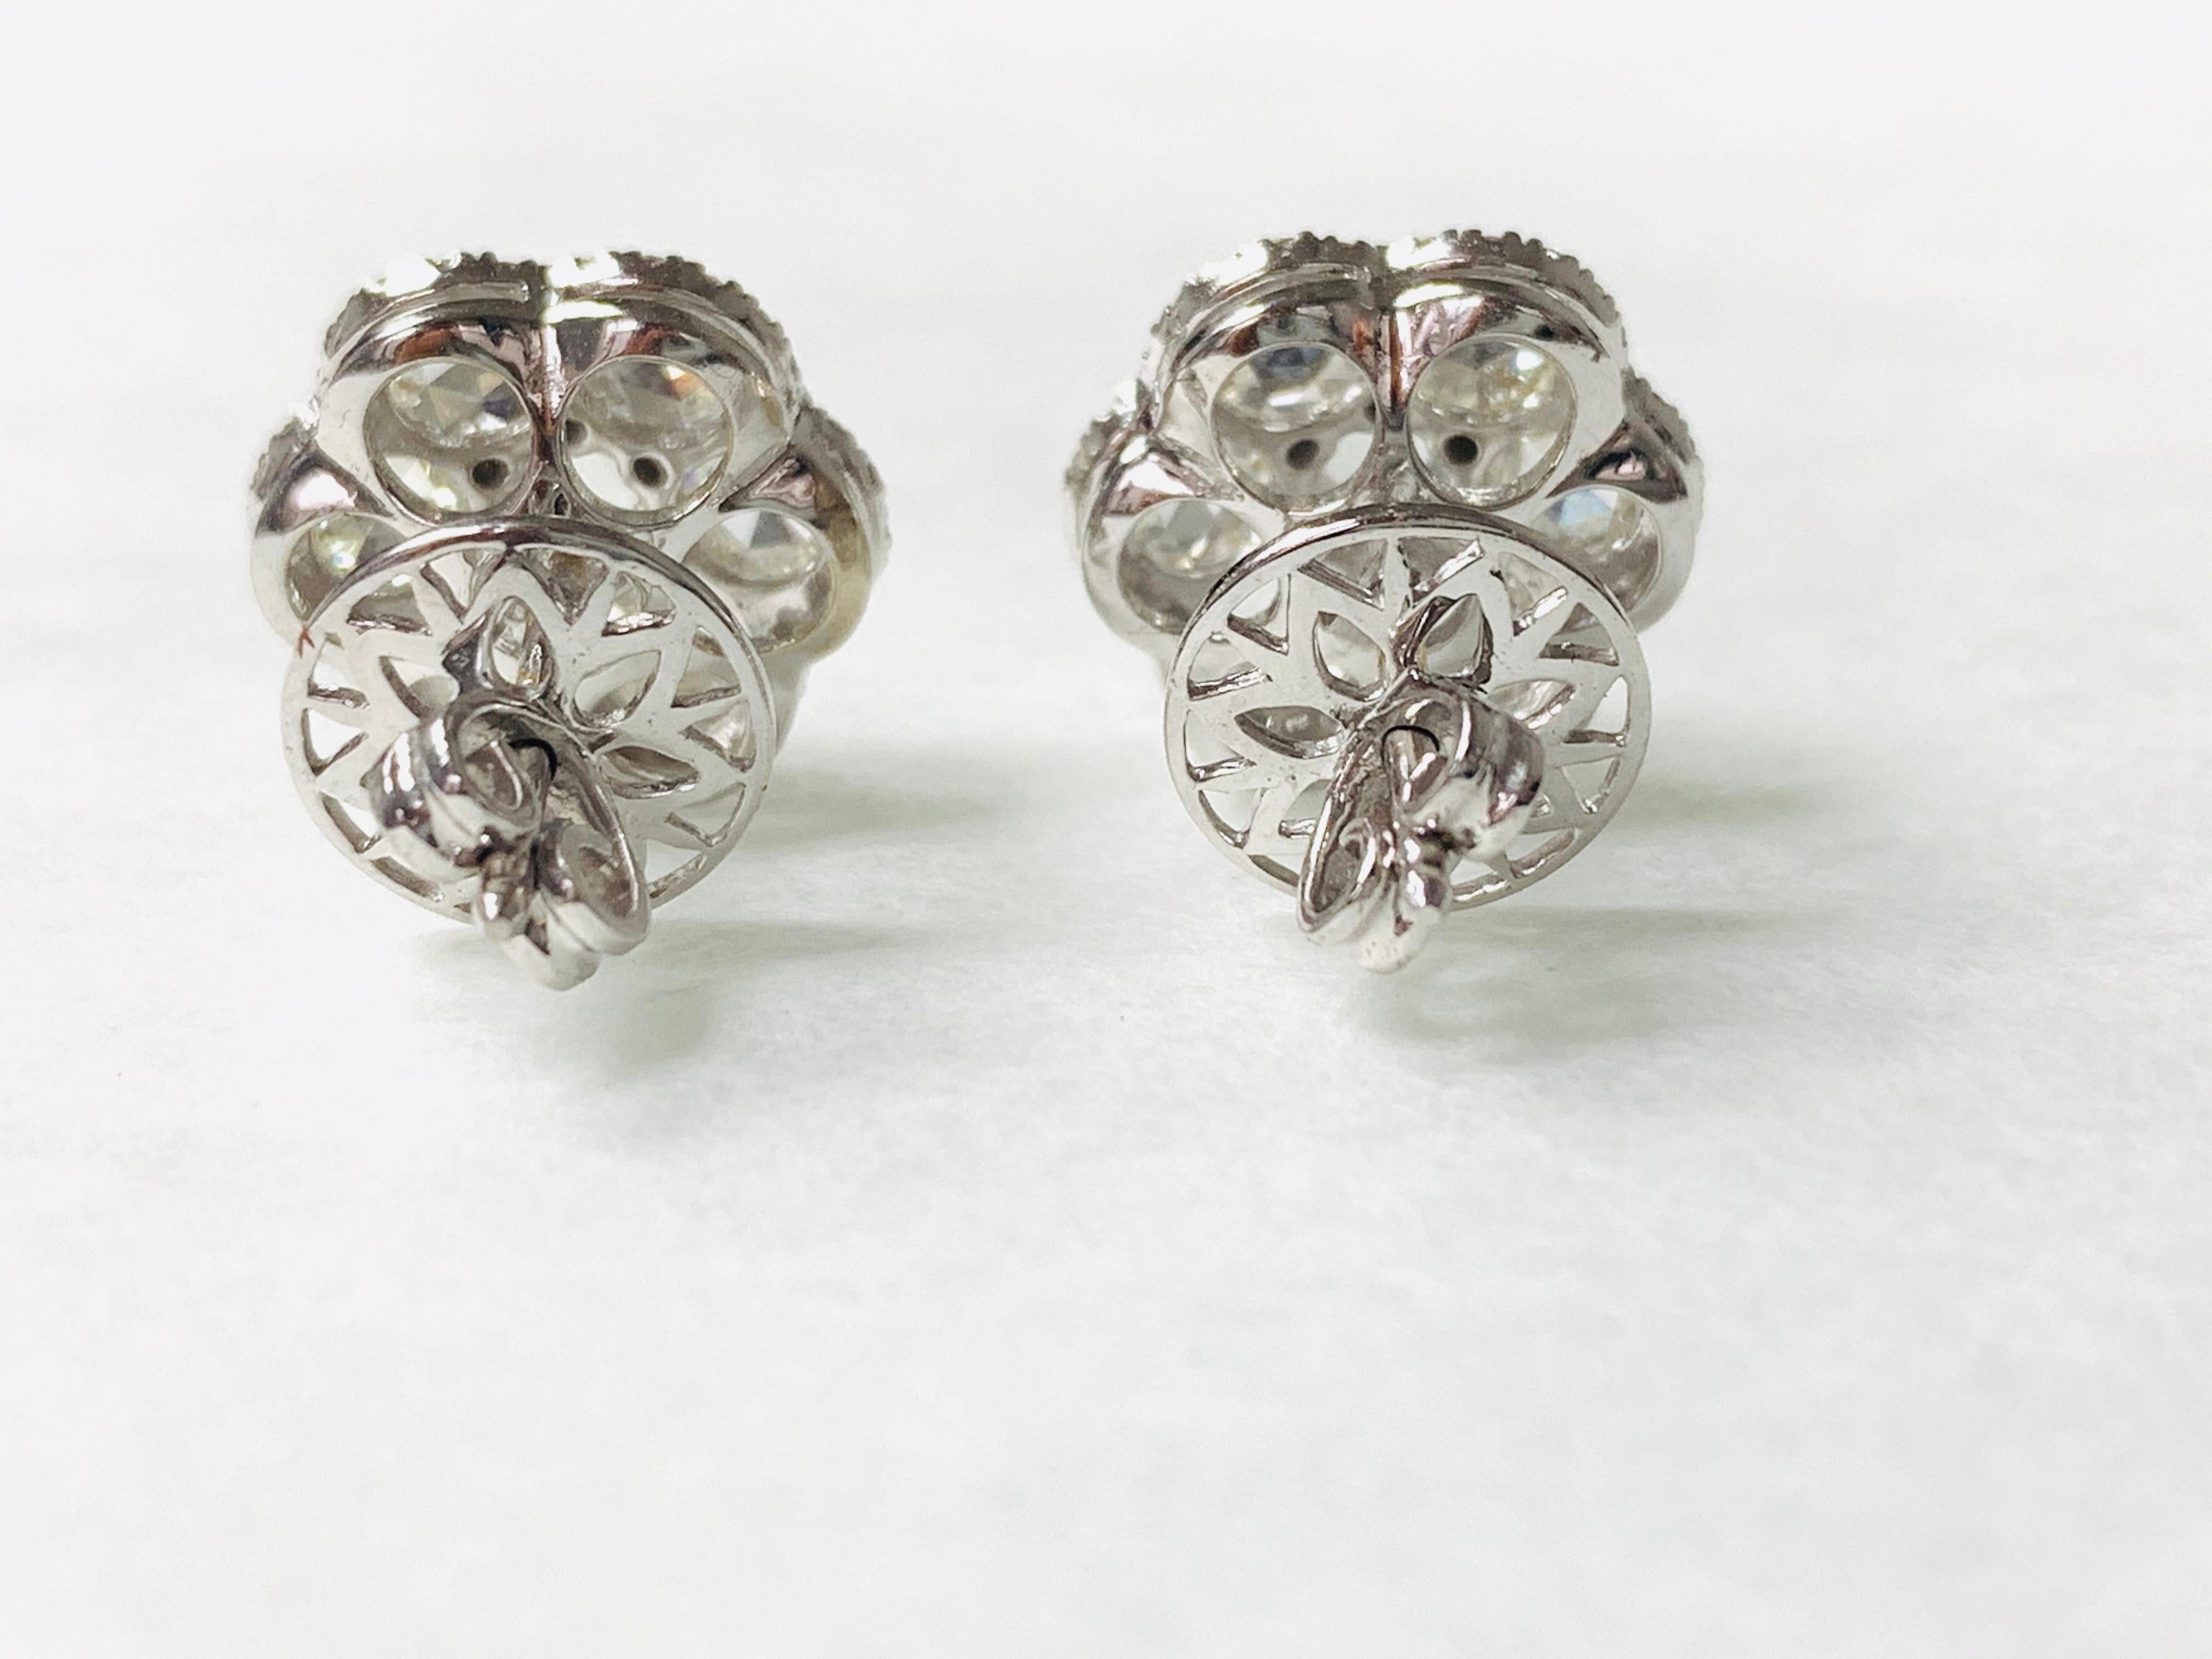 Moguldiam Inc White Rose Cut Diamond stud earrings in 18 k white gold. 
Rose Cut Diamond Weight : 2.46 carat 
White Small Diamonds : 0.39 carat 
Color and Clarity : GH color and VS clarity 
Metal : 18k white gold 